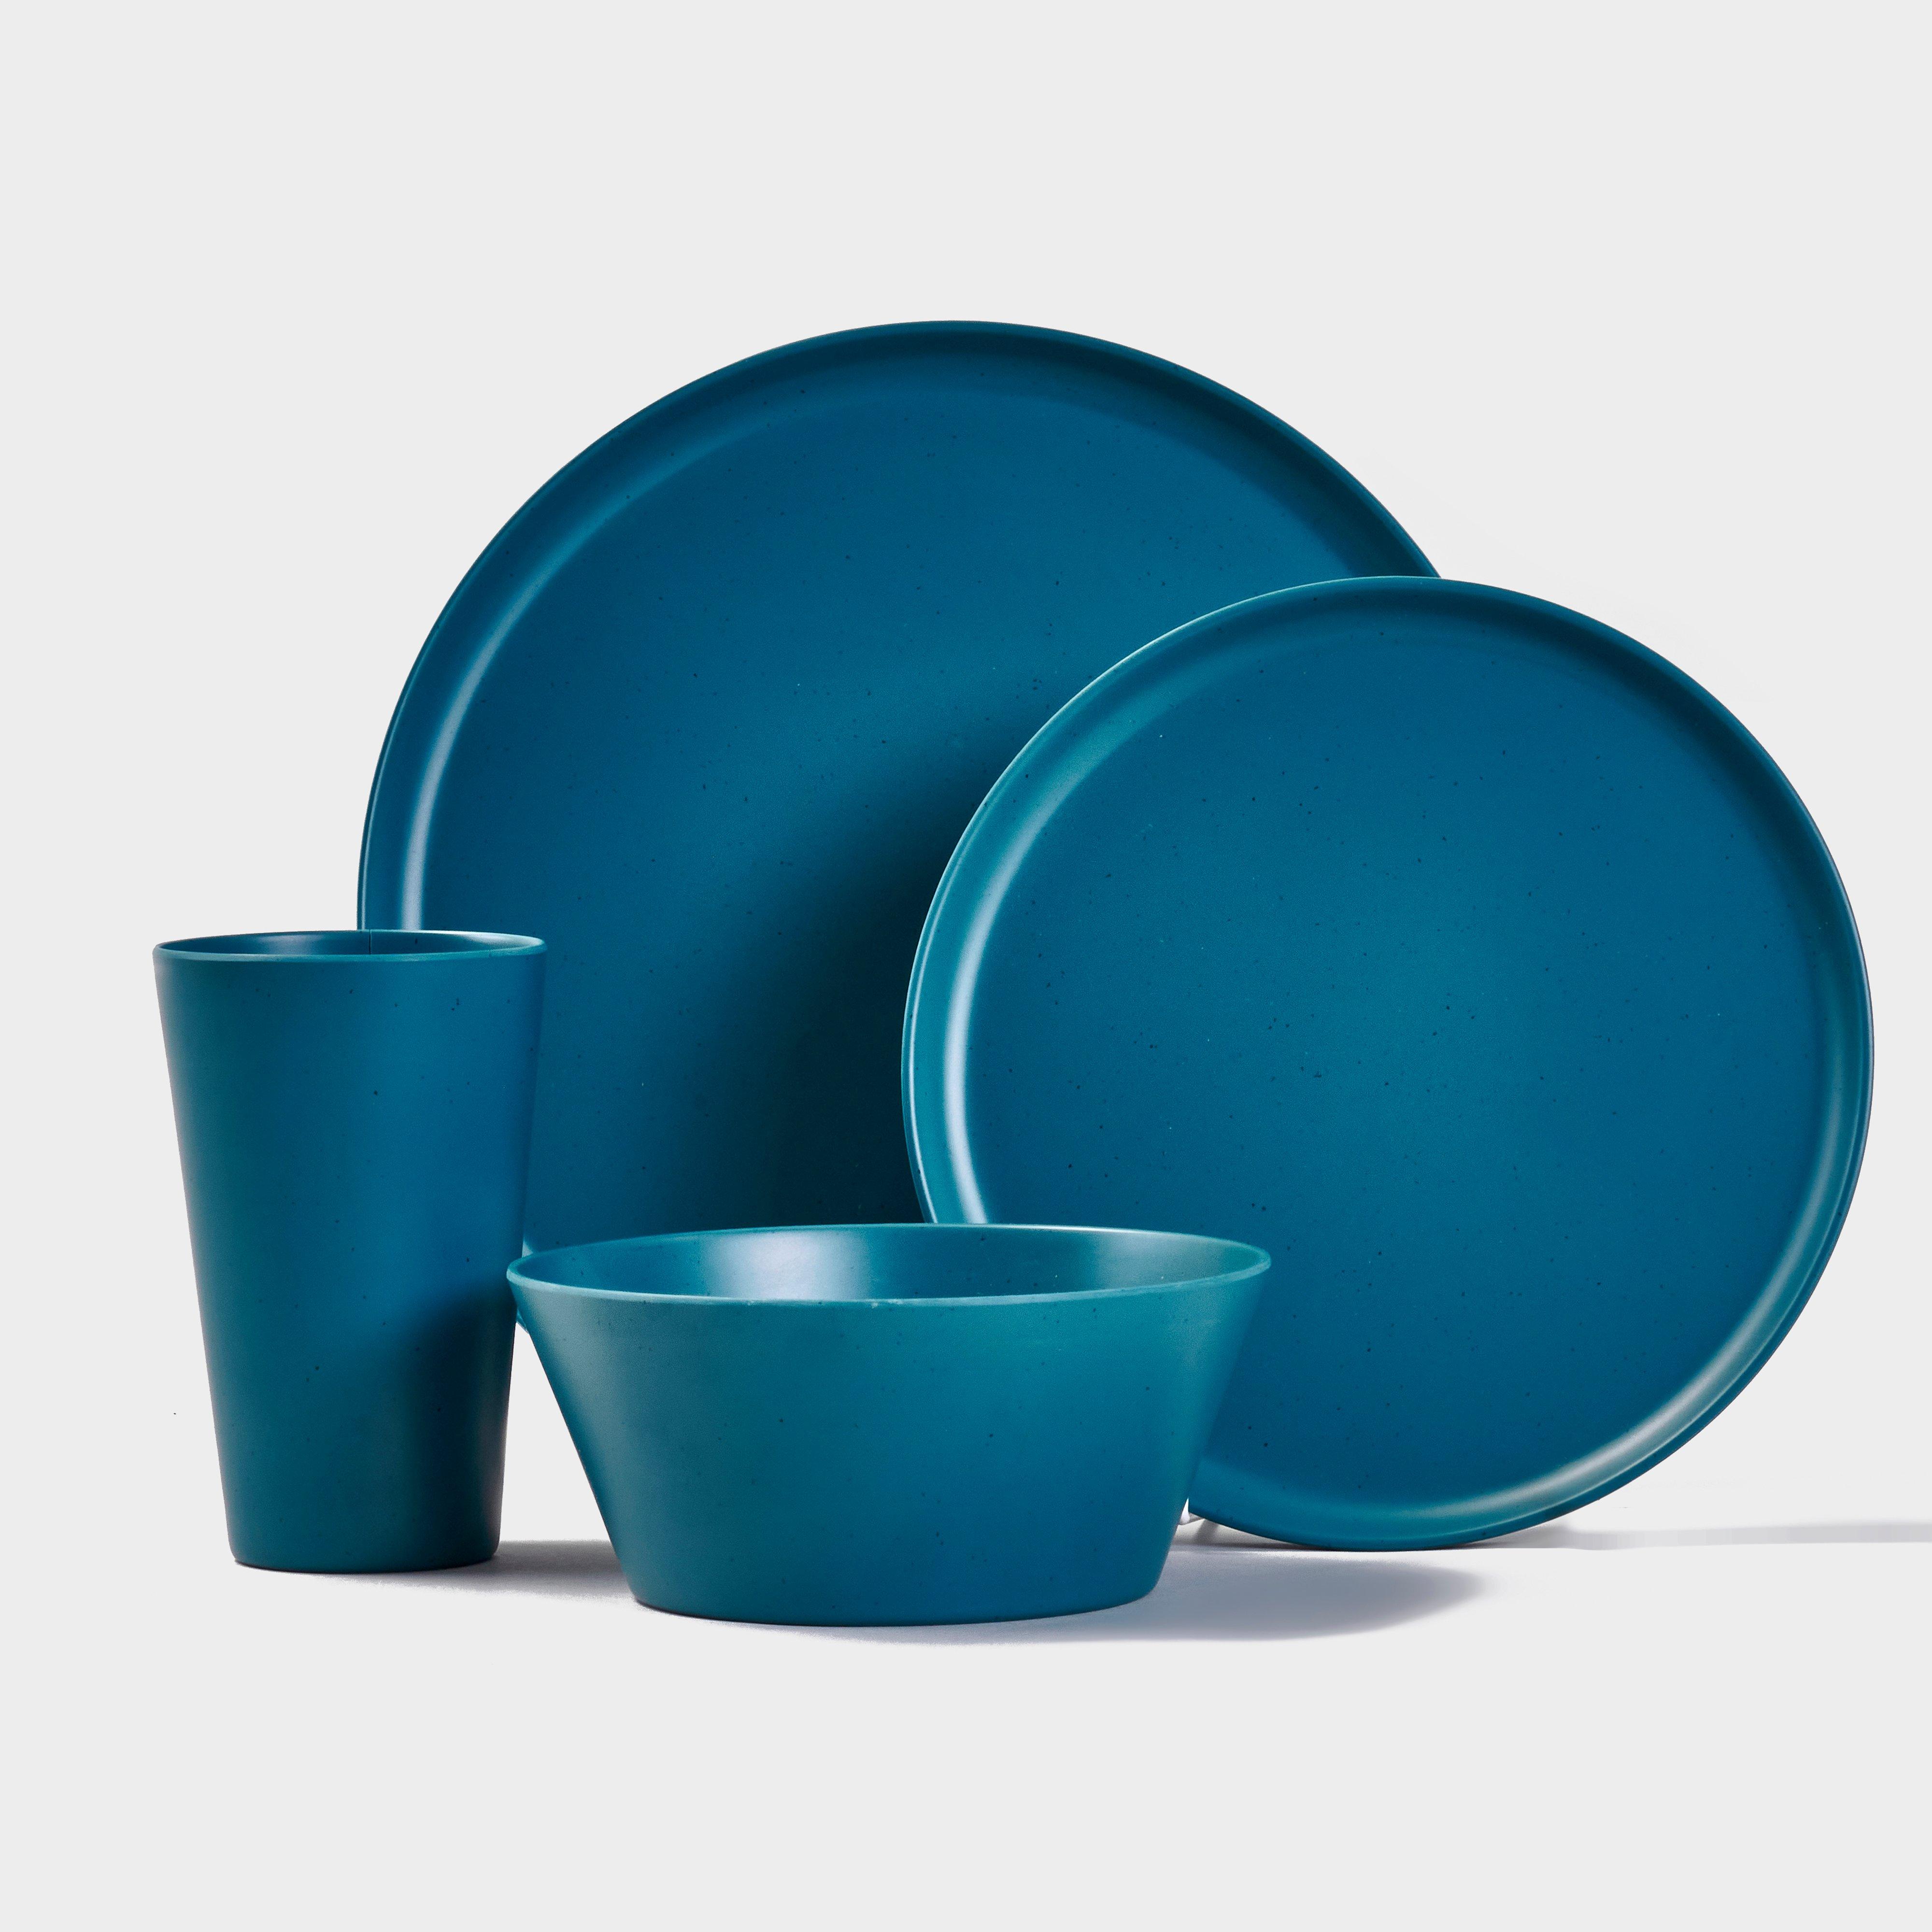  HI-GEAR 16 Piece Melamine Tableware Set, Blue